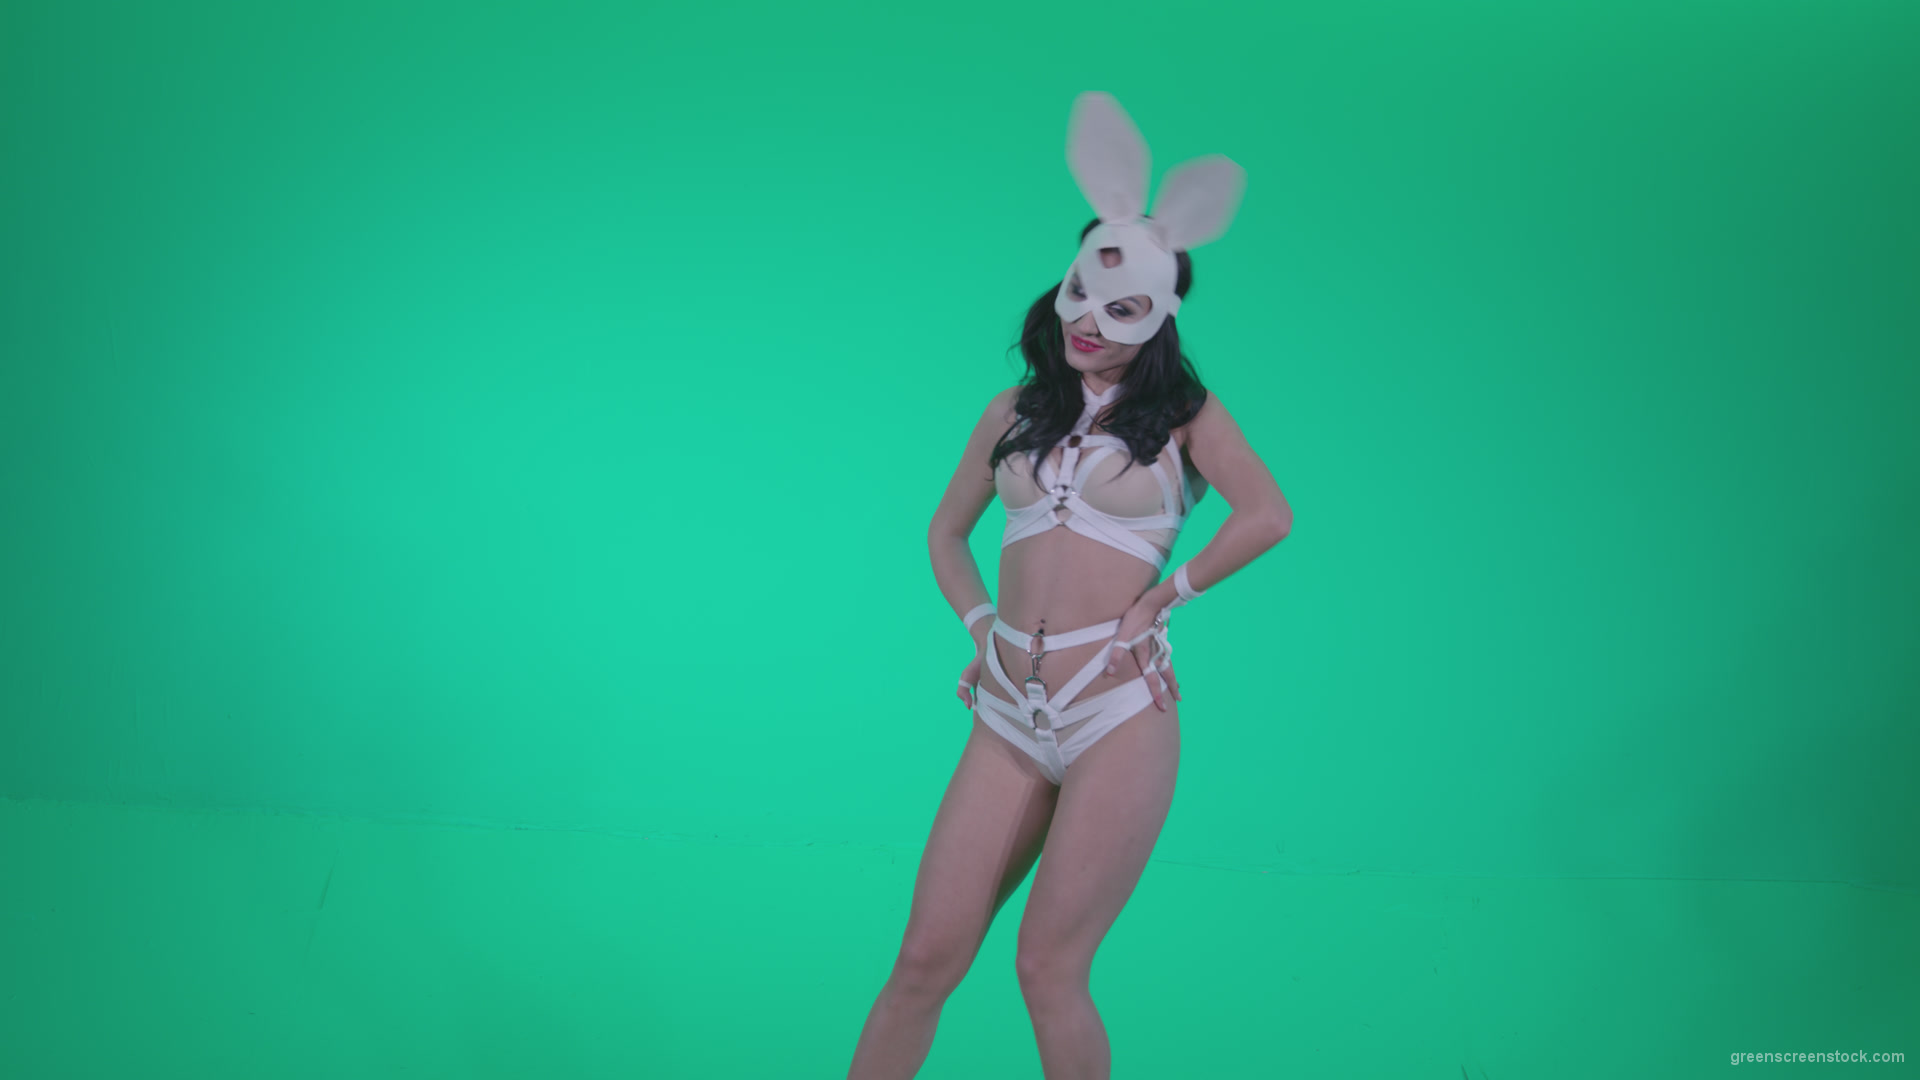 Go-go-Dancer-White-Rabbit-m11-Green-Screen-Video-Footage_006 Green Screen Stock